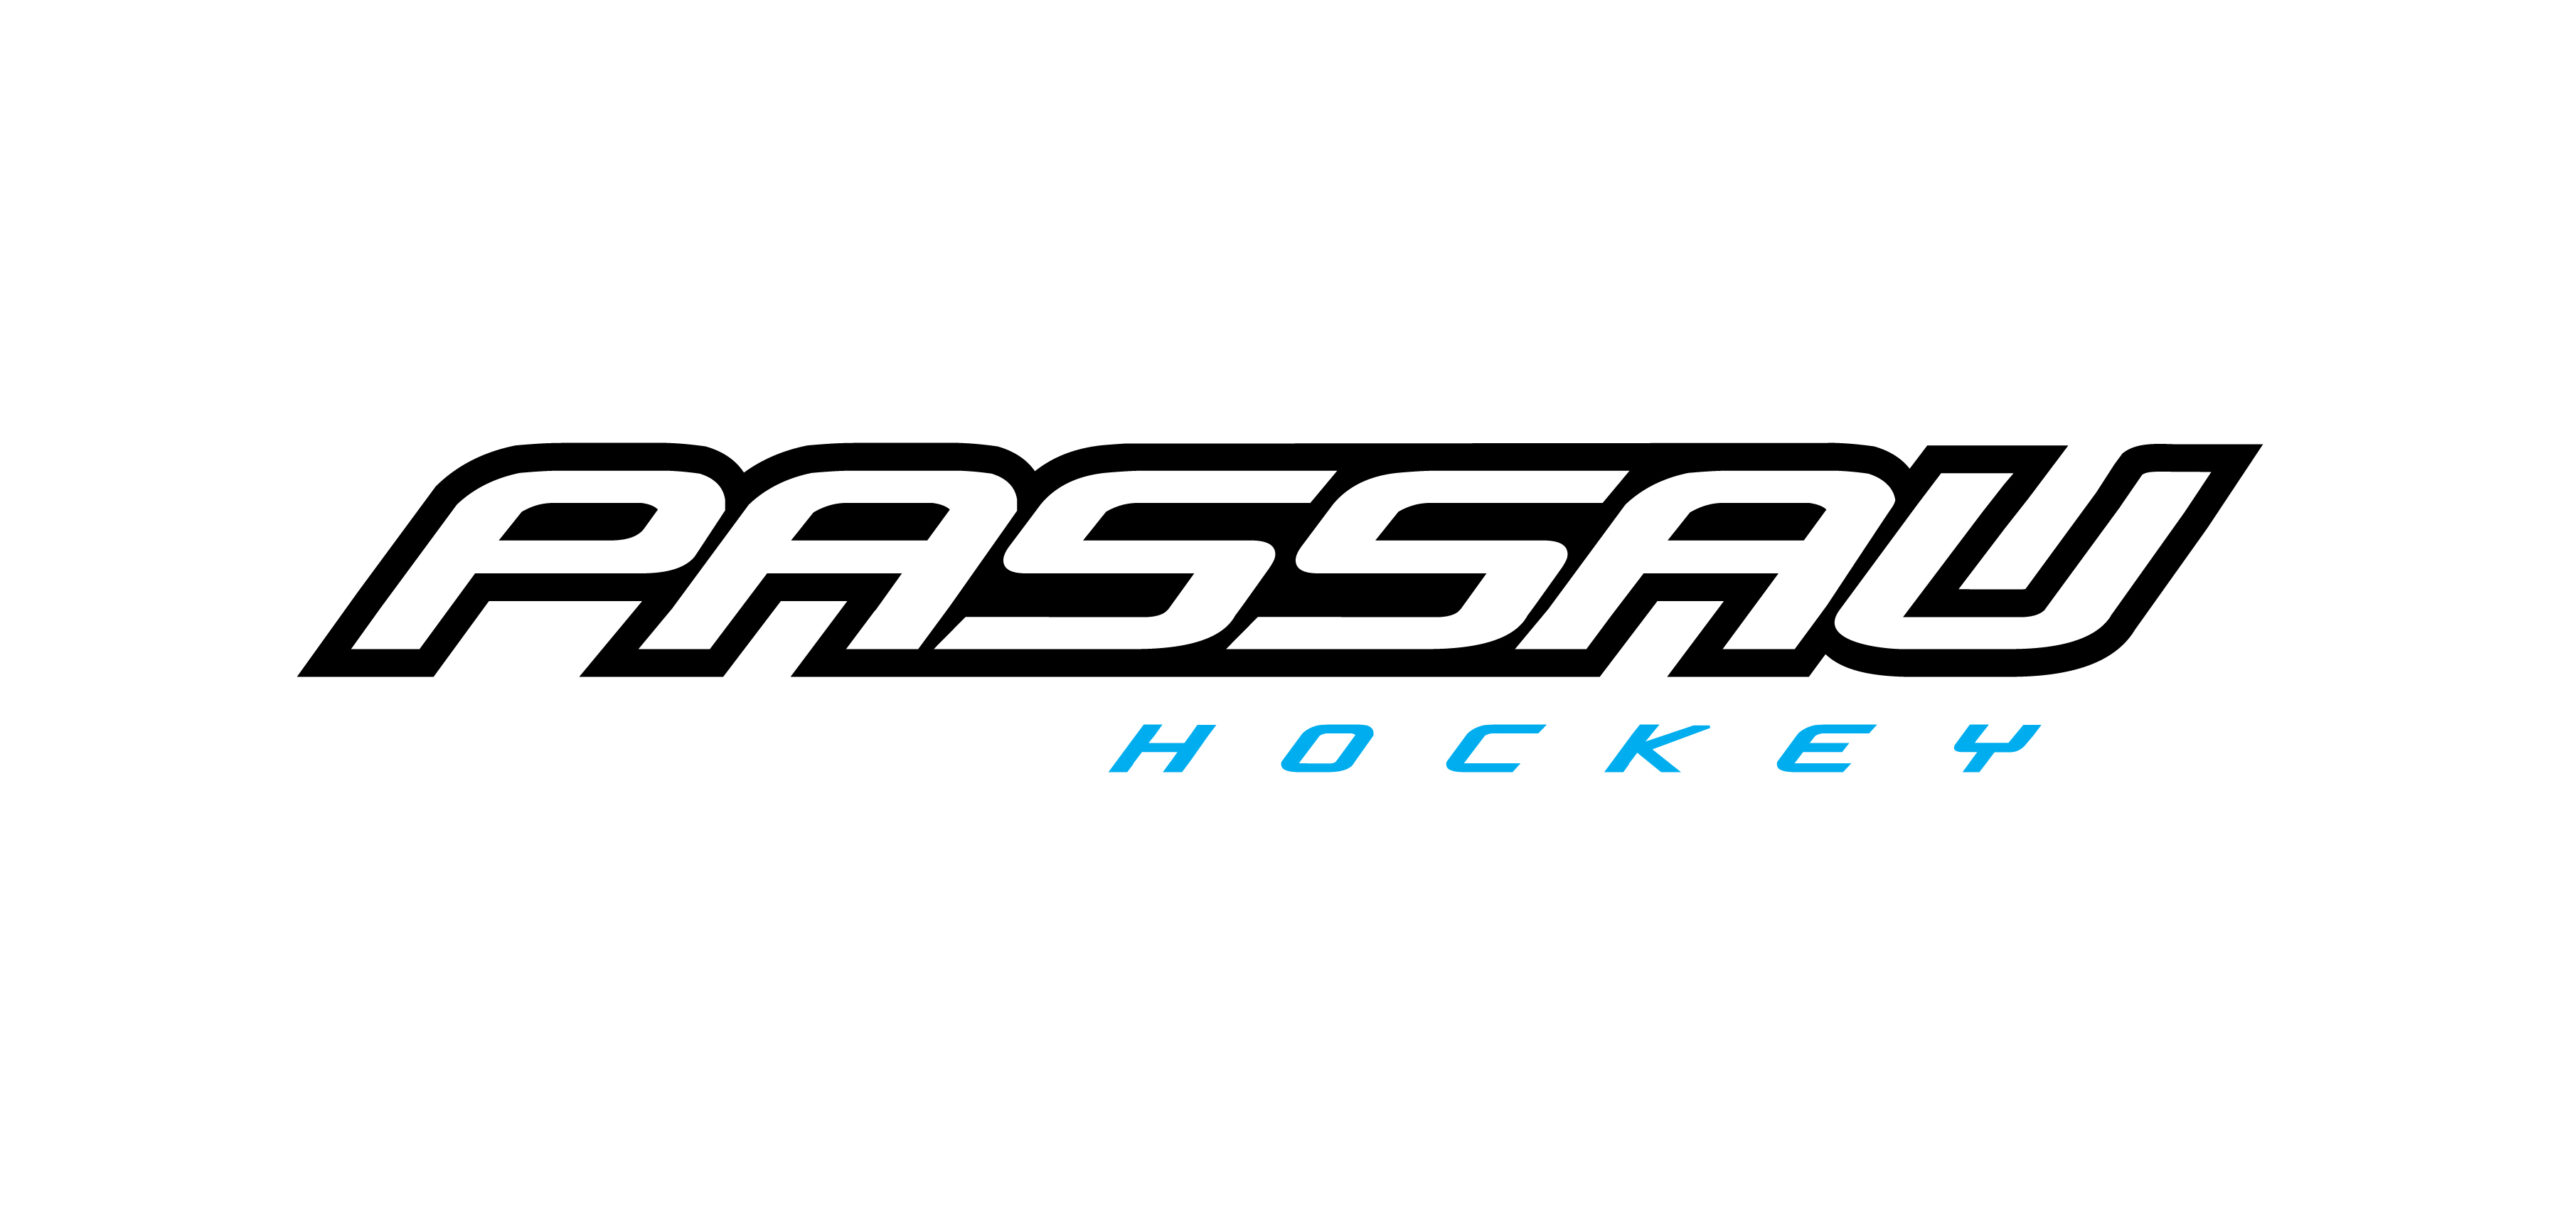 Passau Logo #1